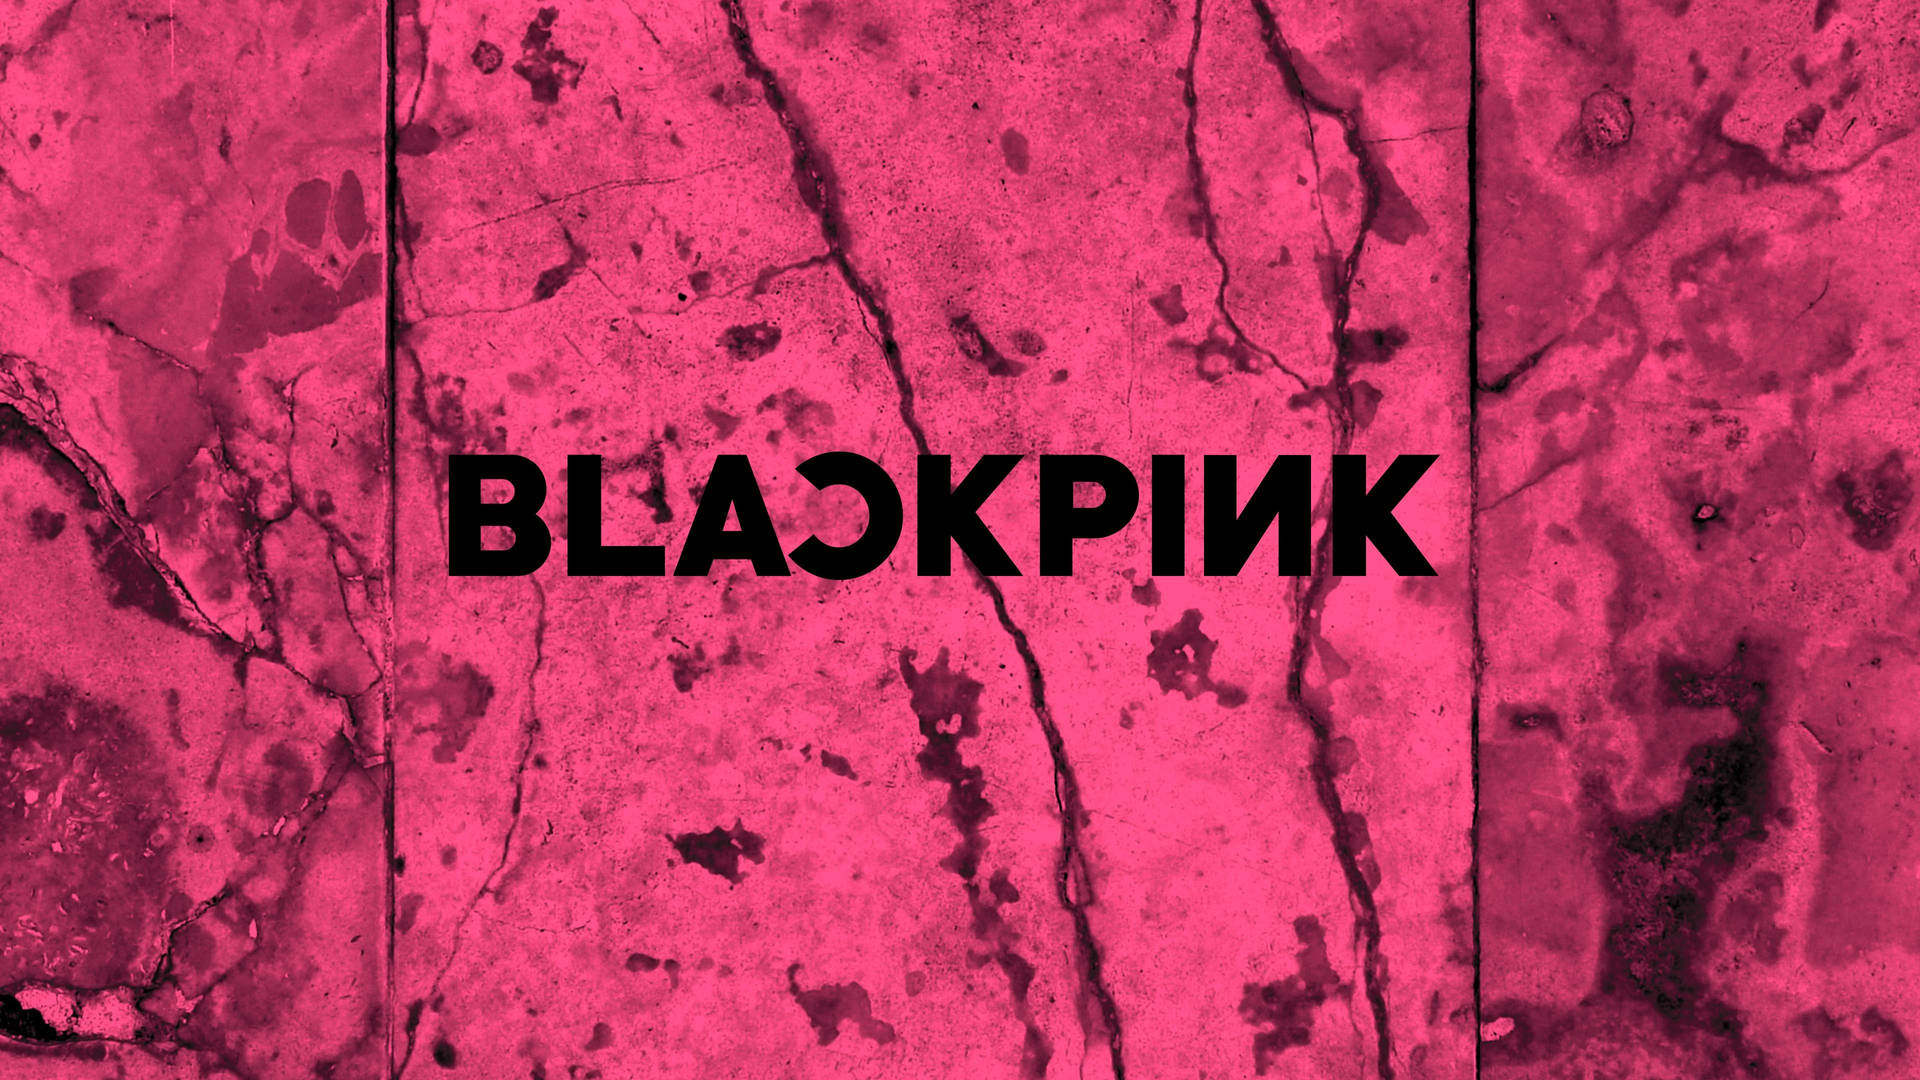 Blackpink Logo On Cool Pink Wall